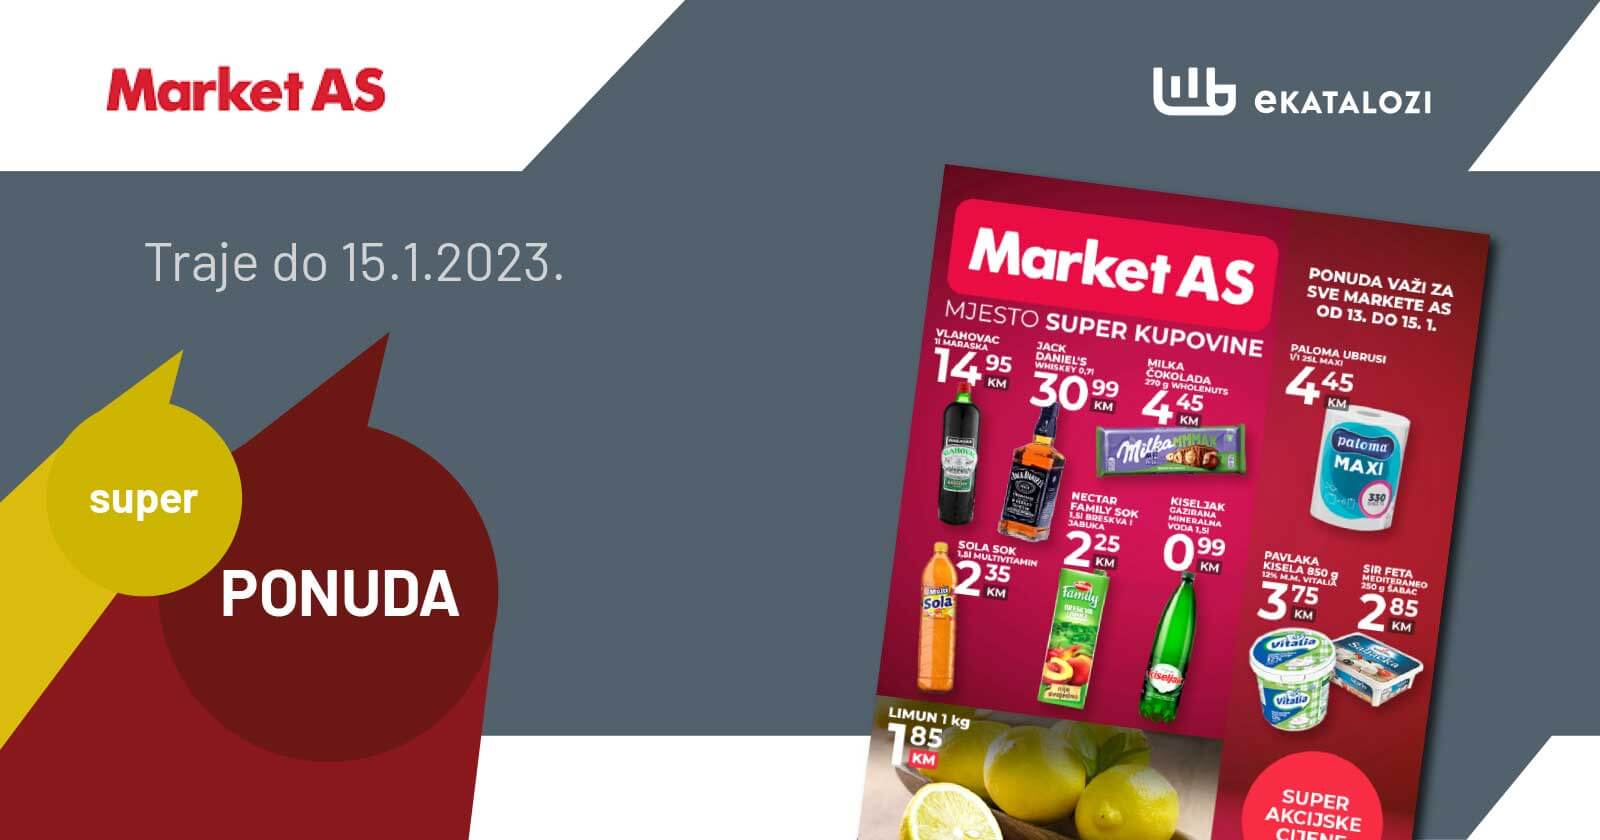 market as vikend akcija januar 2023. novi market as katalog traje od 13.1. do 15.1.2023. market as vikend akcija